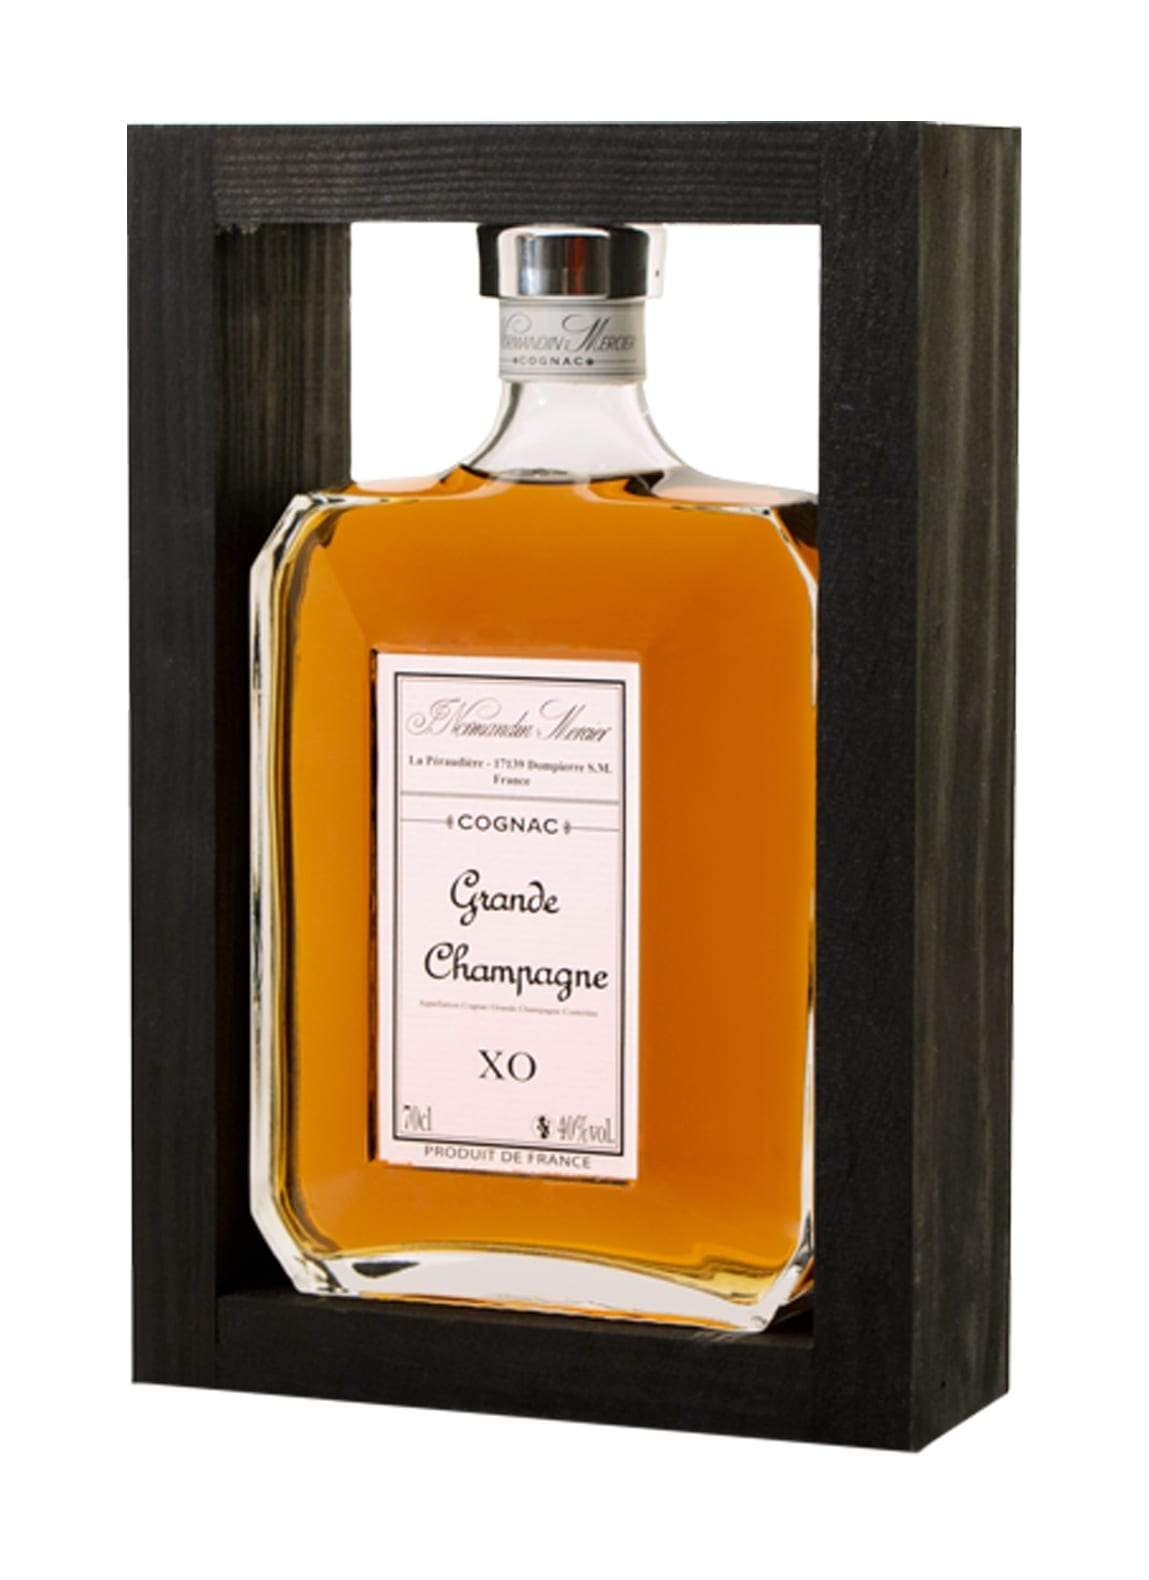 Normandin-Mercier Cognac XO 30 years Grande Champagne Carafe 40% 700ml | Brandy | Shop online at Spirits of France